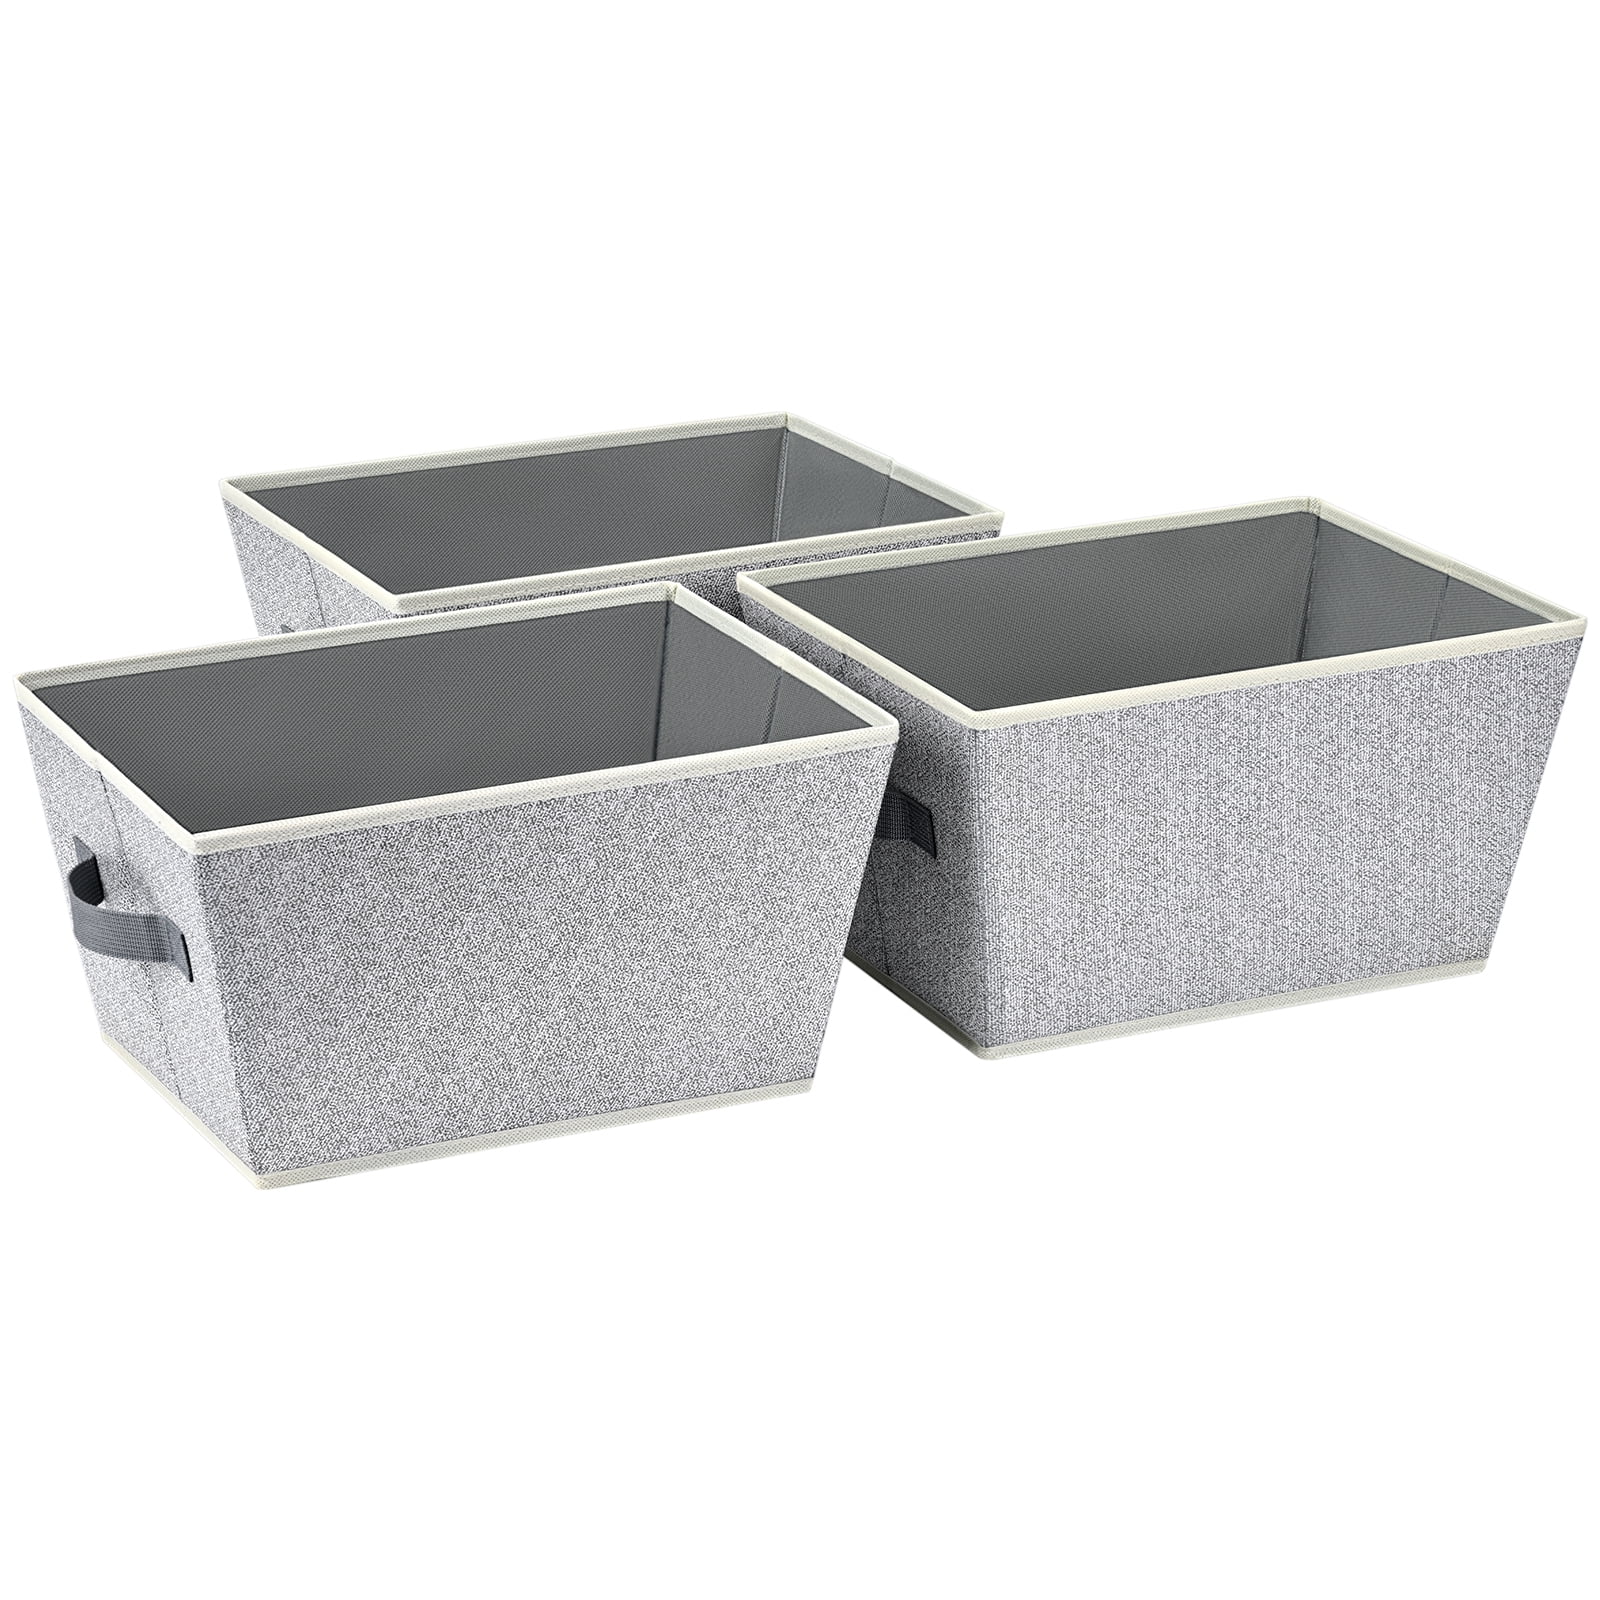  HNZIGE Foldable Cube Storage Bin(4 Pack ) Storage Baskets  For Shelves, Closet,12x12 Storage Cube Bins Baskets For Cube Organizer,  Fabric Storage Cubes For Storage Home Organization